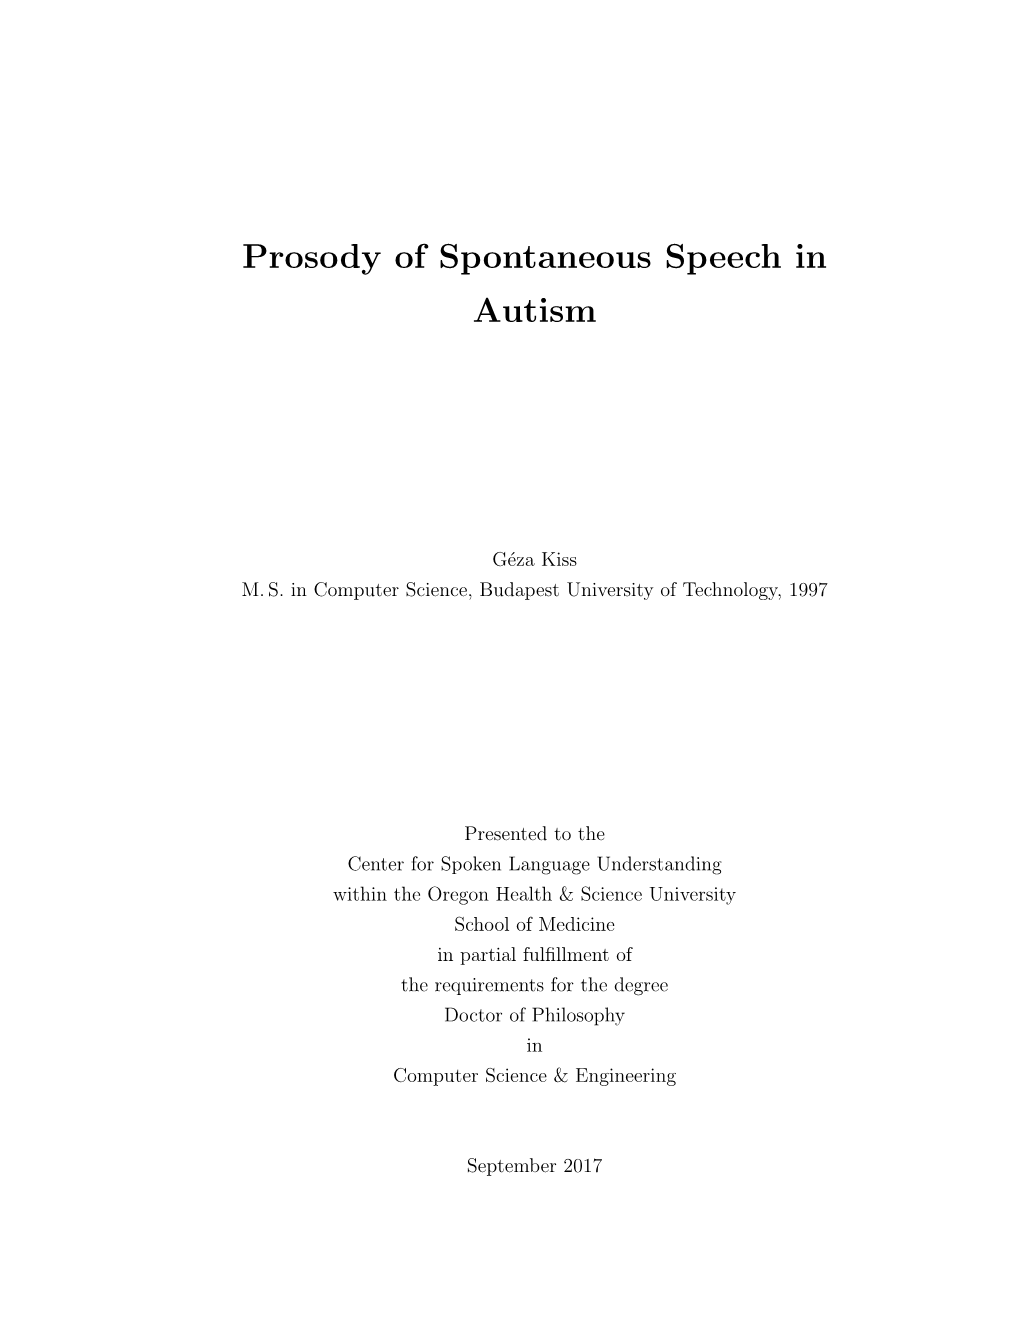 Prosody of Spontaneous Speech in Autism